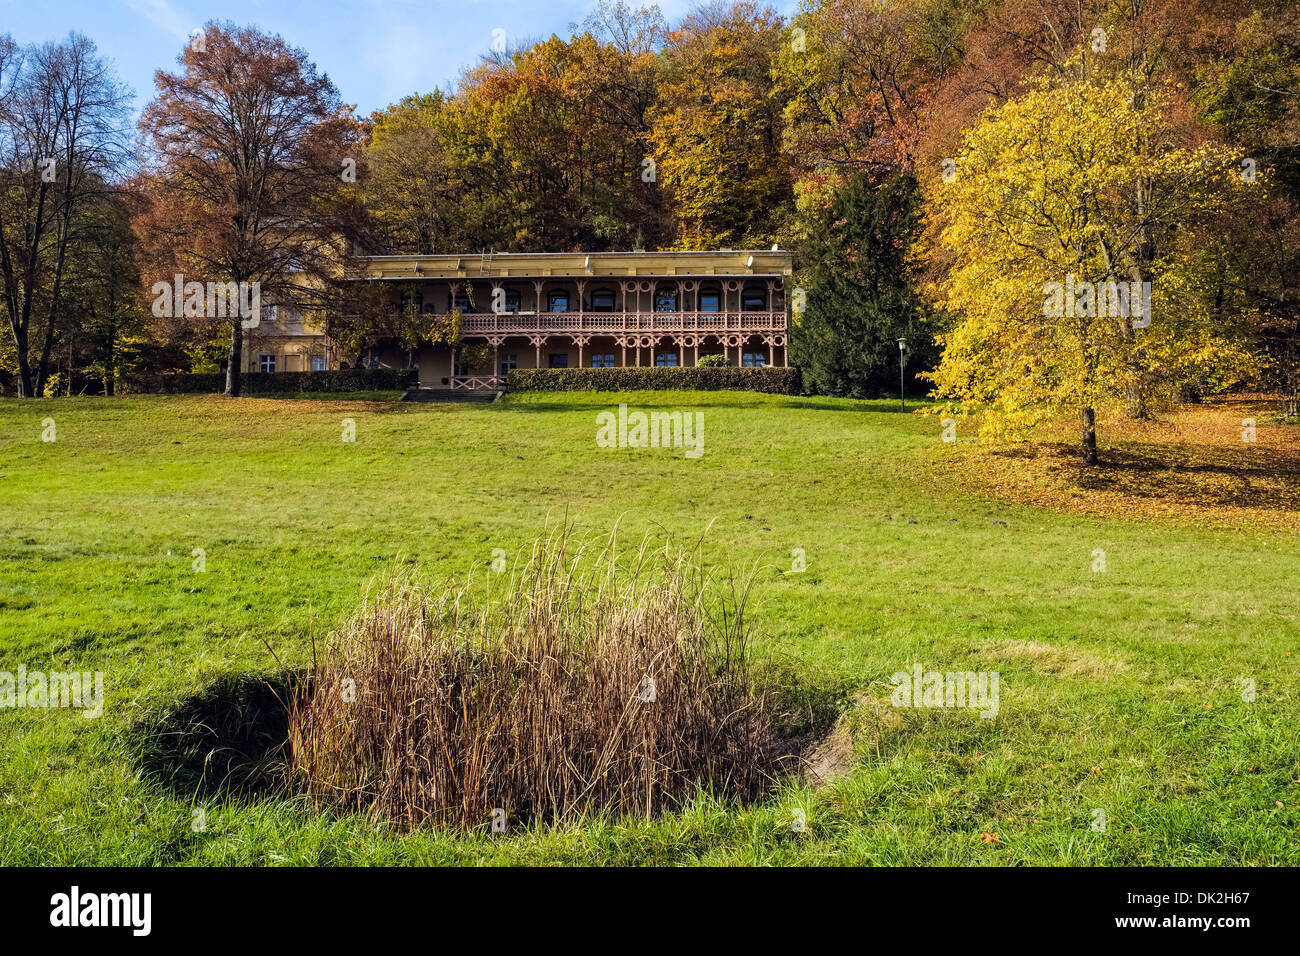 Villa Bellevue de Badepark, Zumaia, Saxonia, Allemagne Banque D'Images